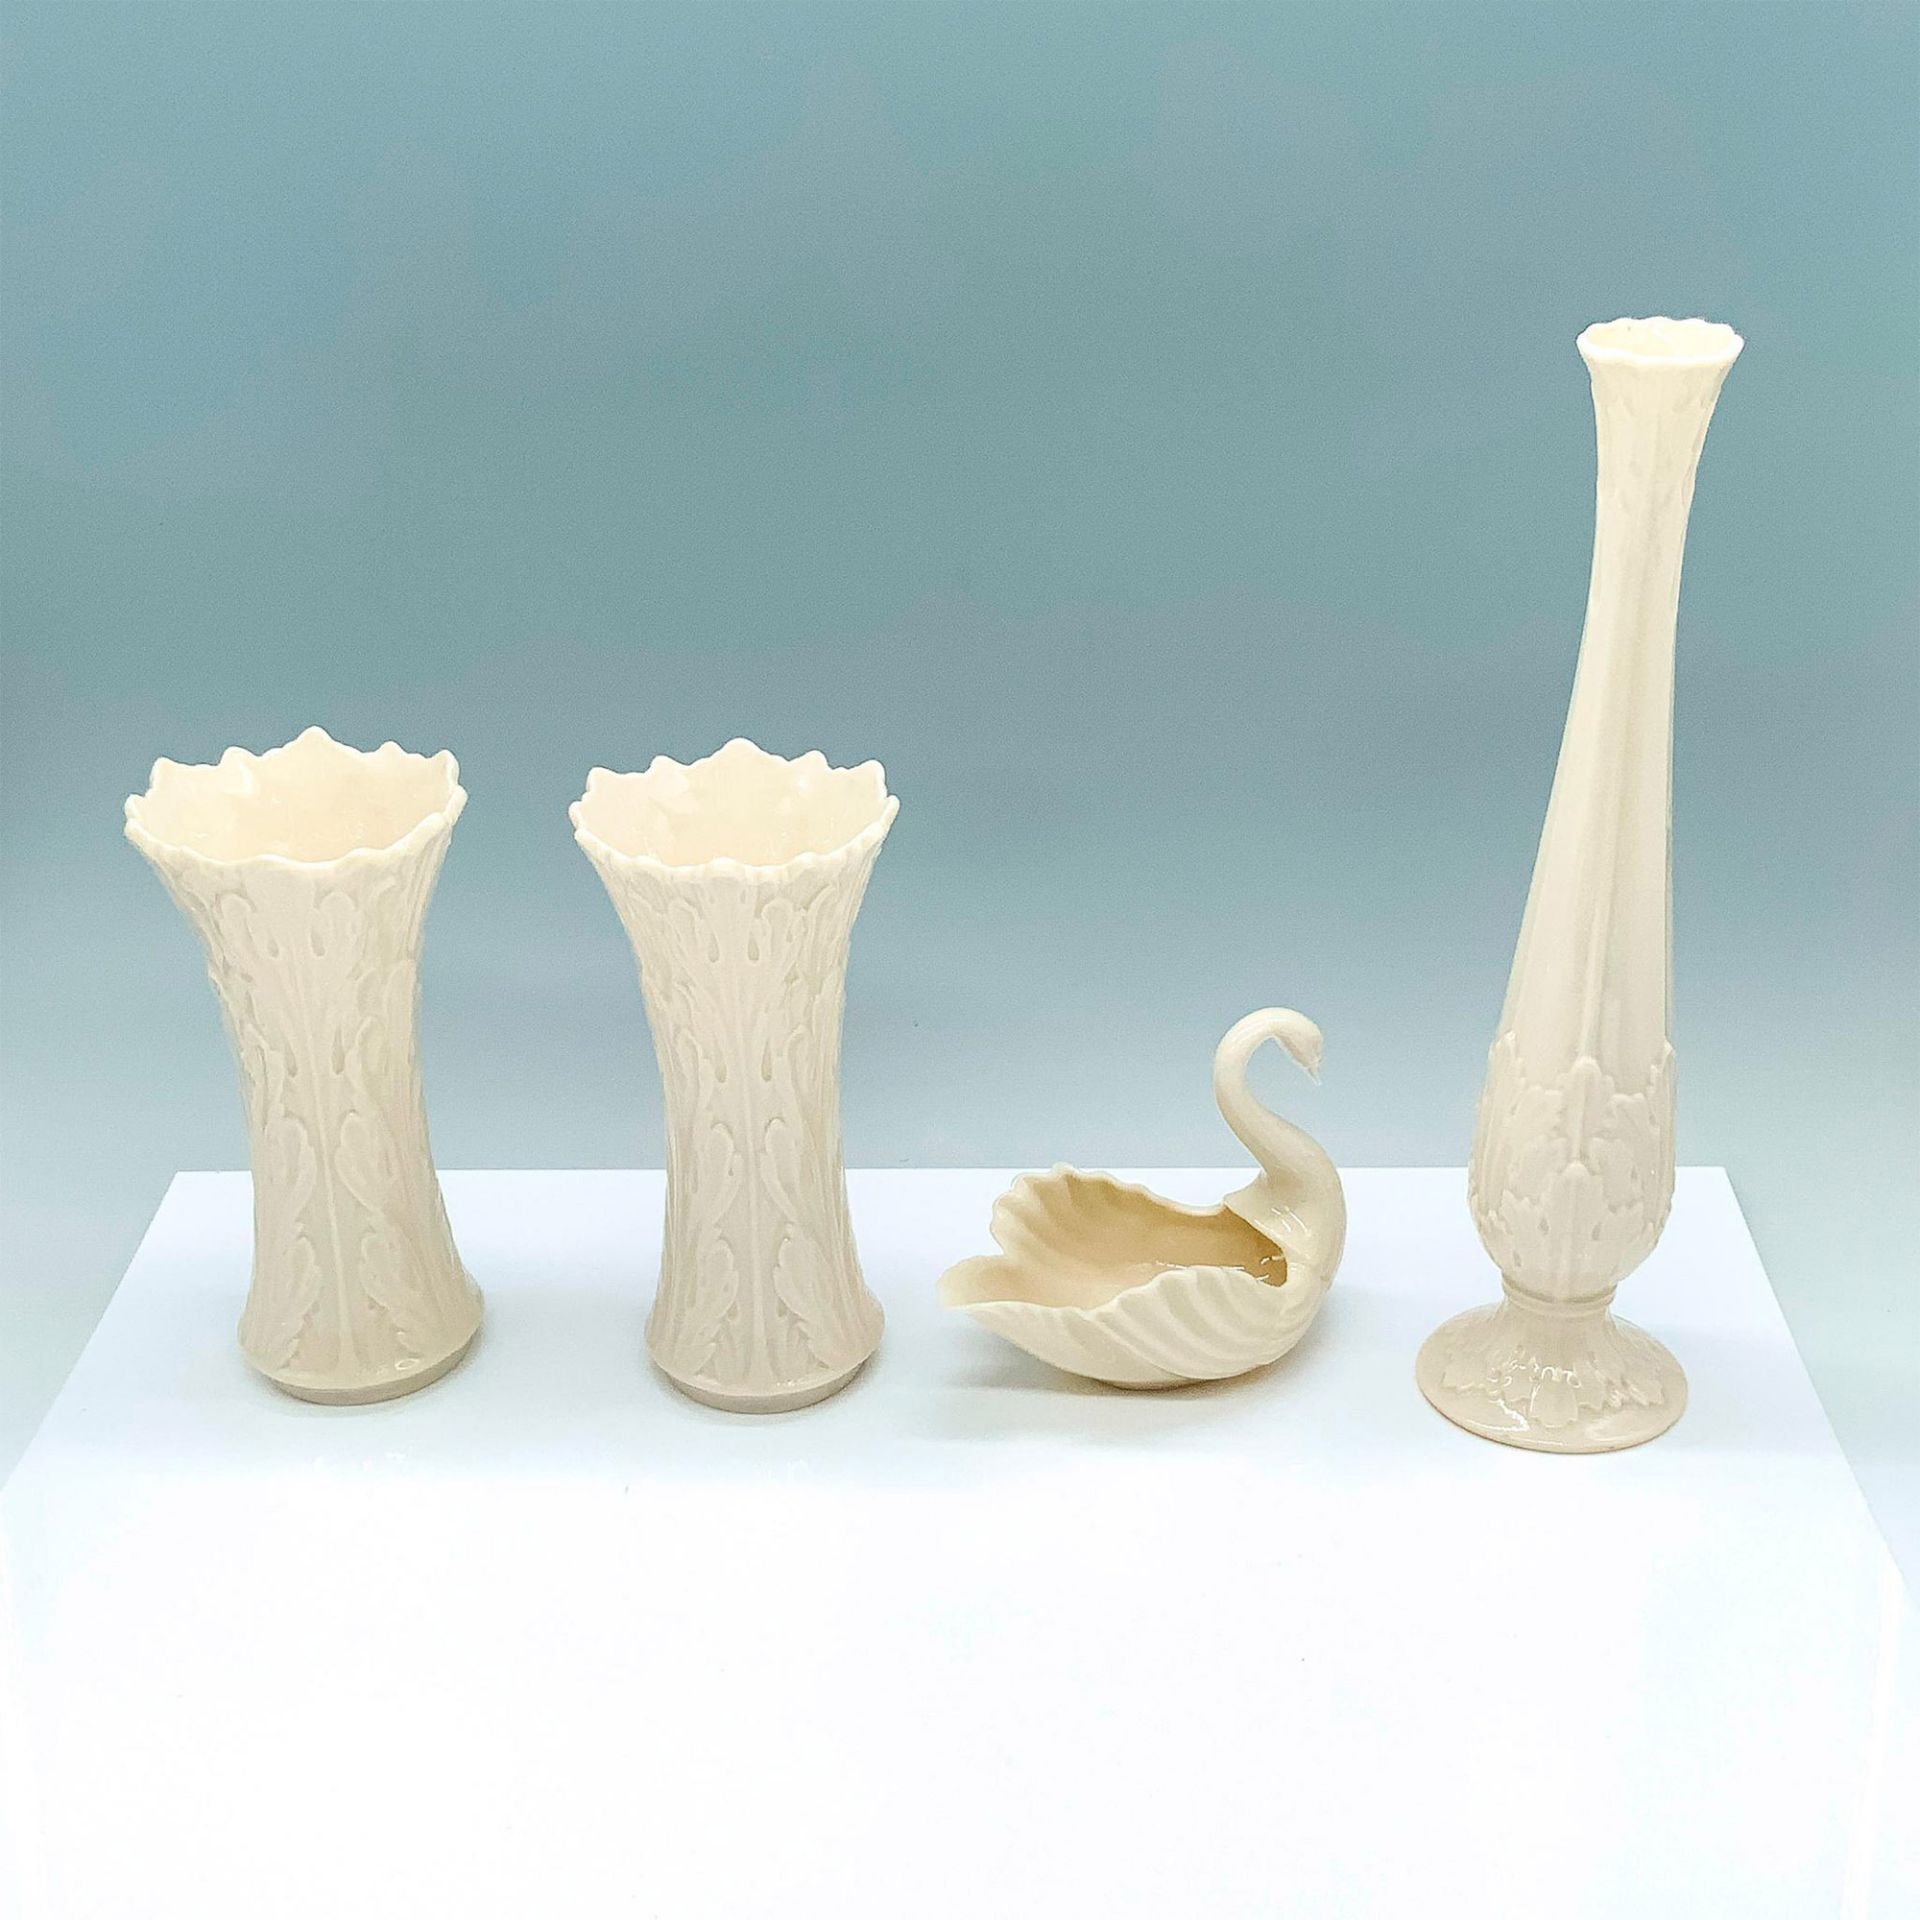 4pc Lenox Porcelain Vases and Bowl - Image 2 of 3